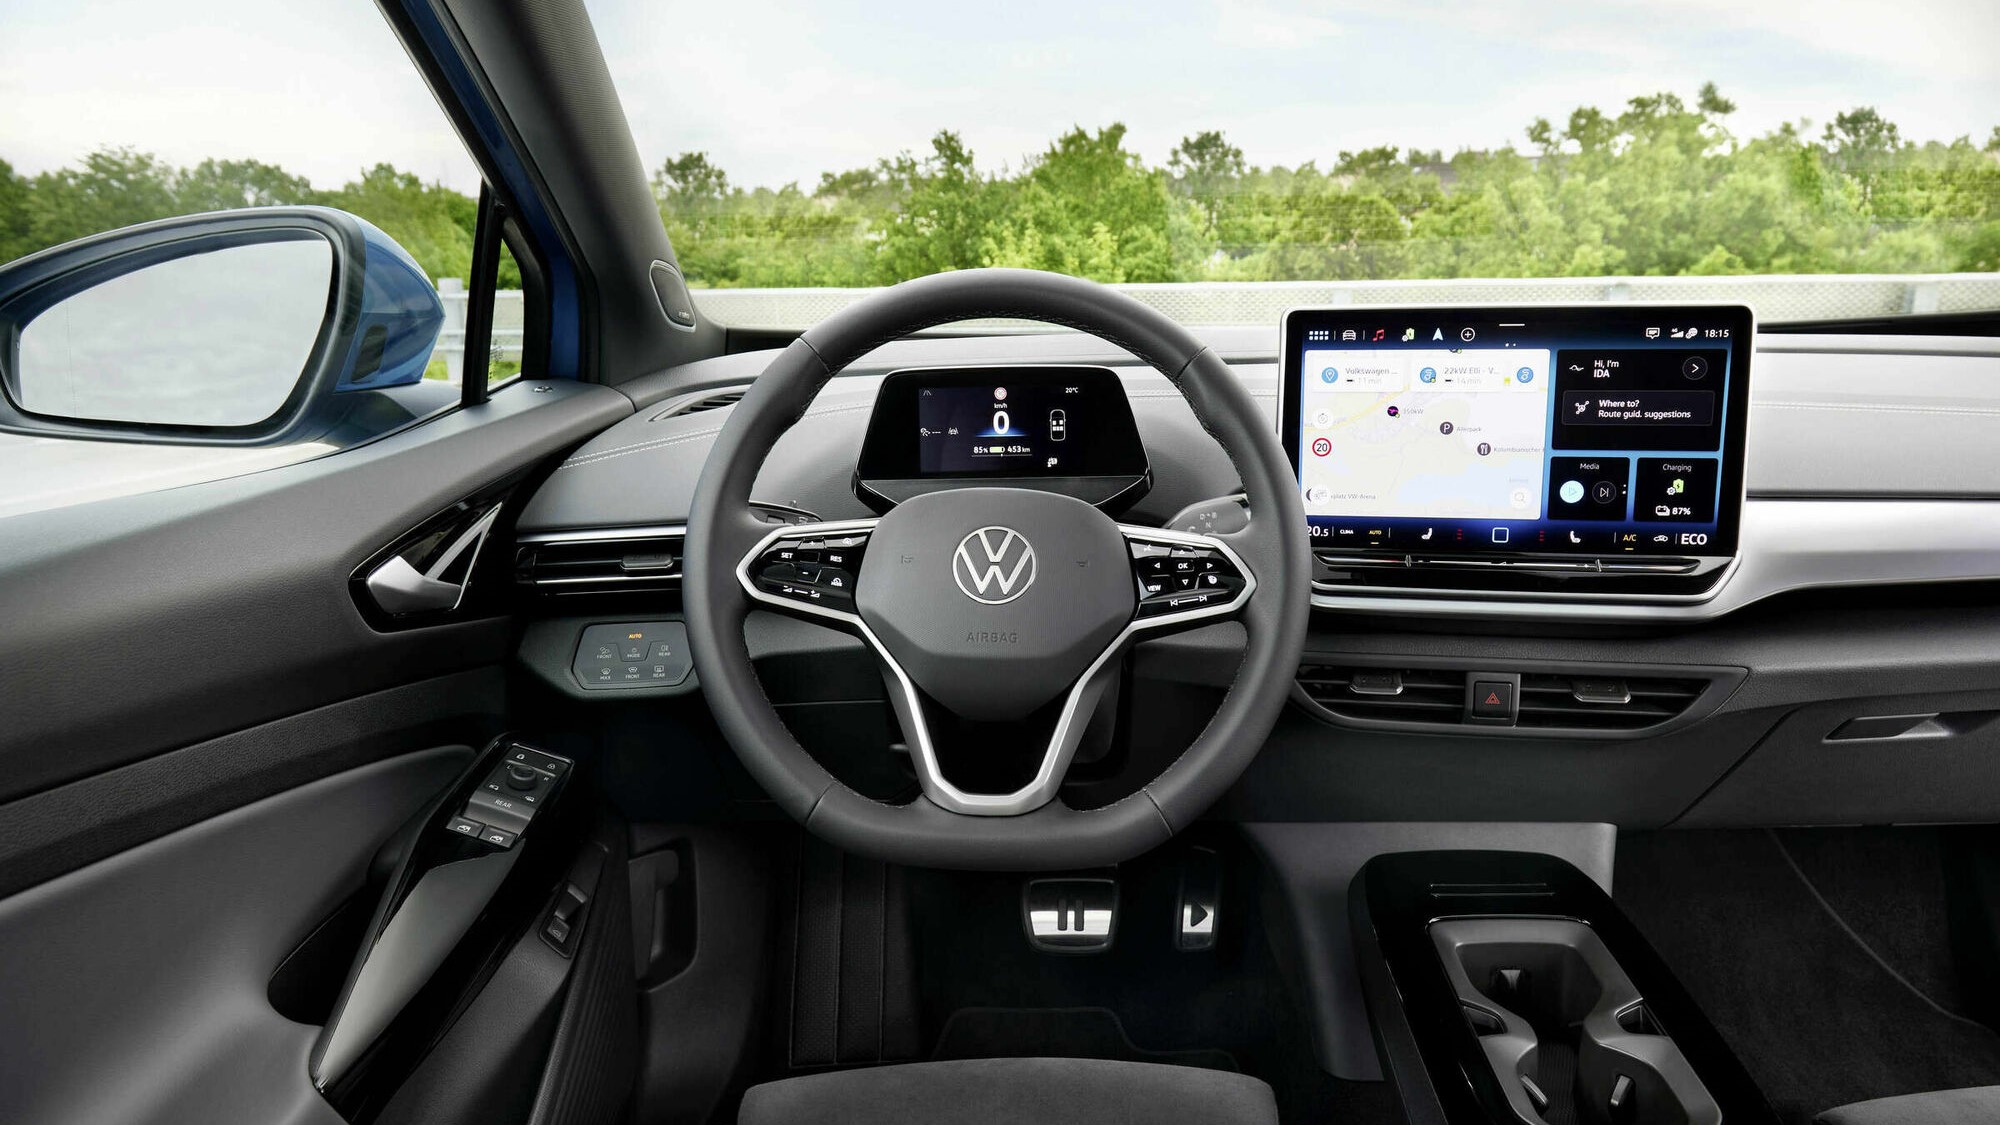 Troublesome Screen Shutdowns Plague VW ID.4 EV Owners